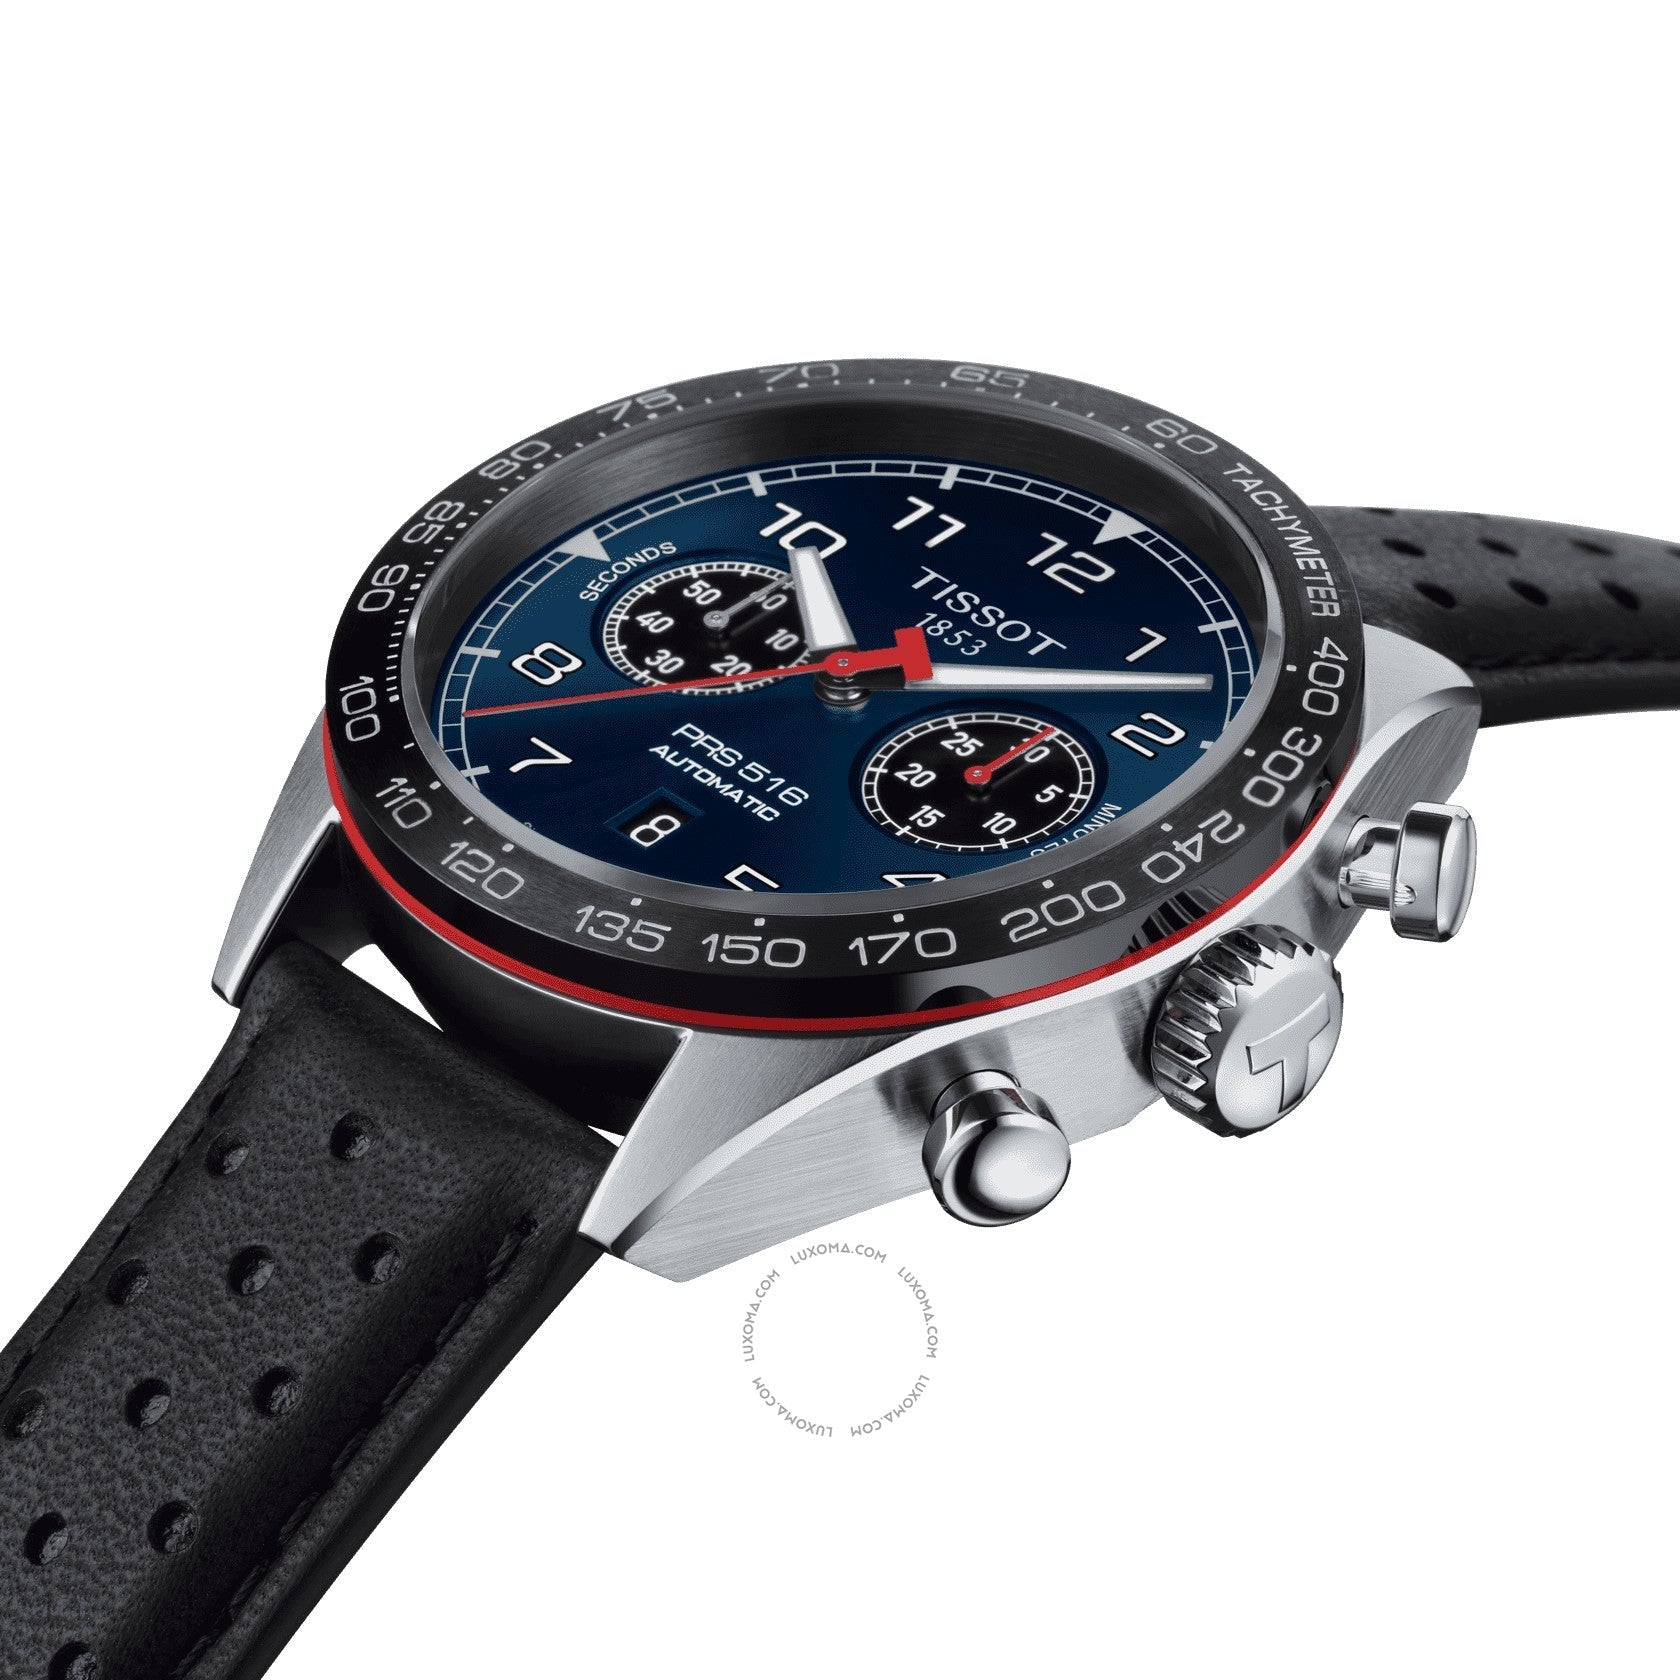 Tissot Tissot T-Sport Chronograph Blue Dial Men's Watch T131.627.16.042.00